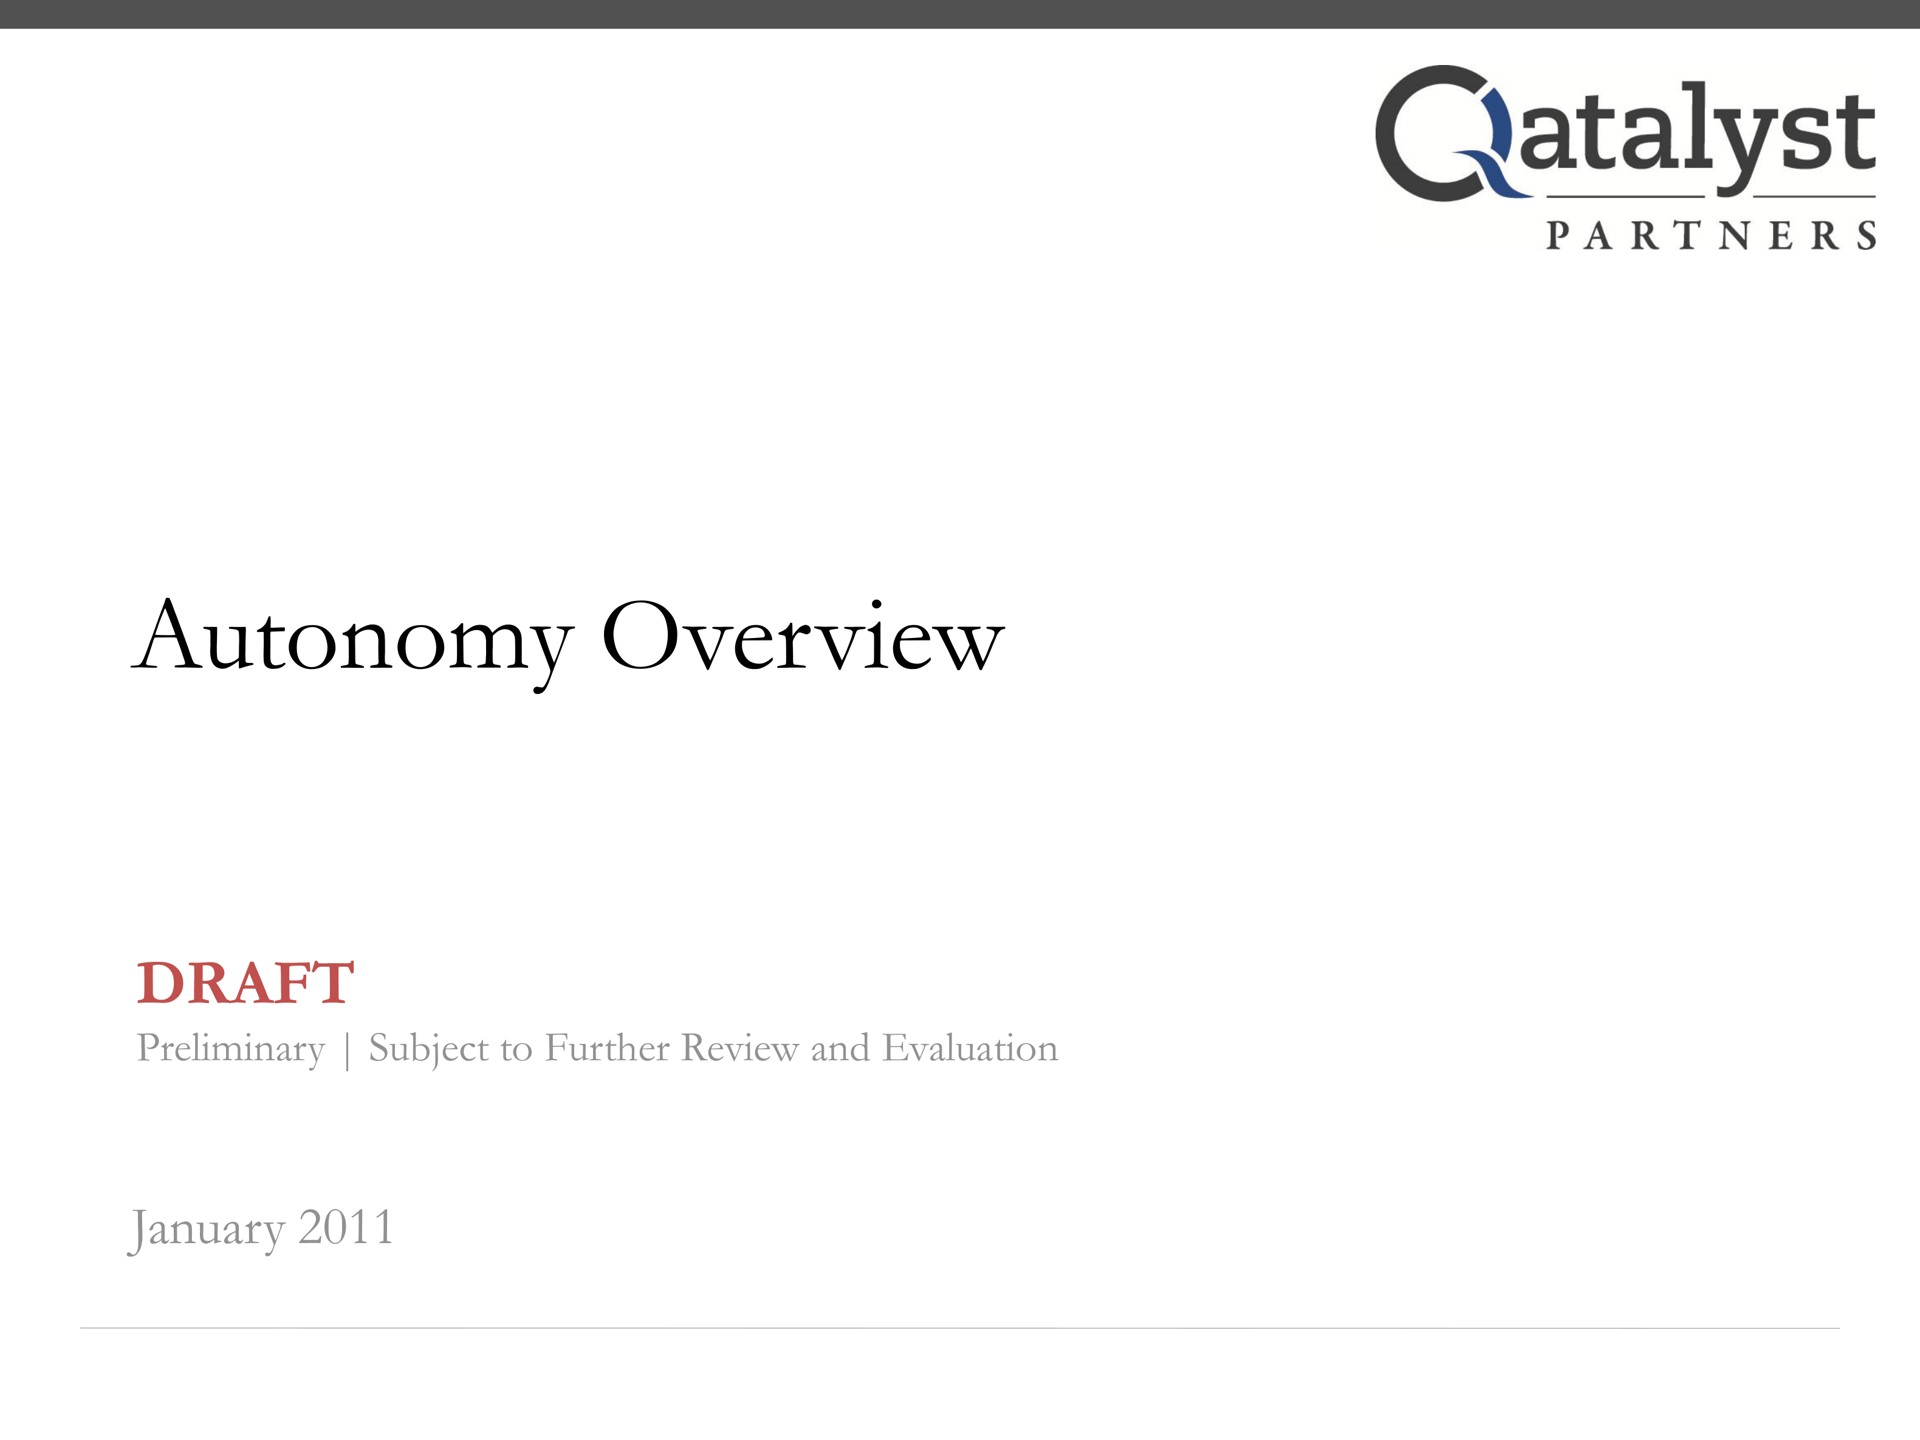 autonomy overview draft catalyst | Qatalyst Partners